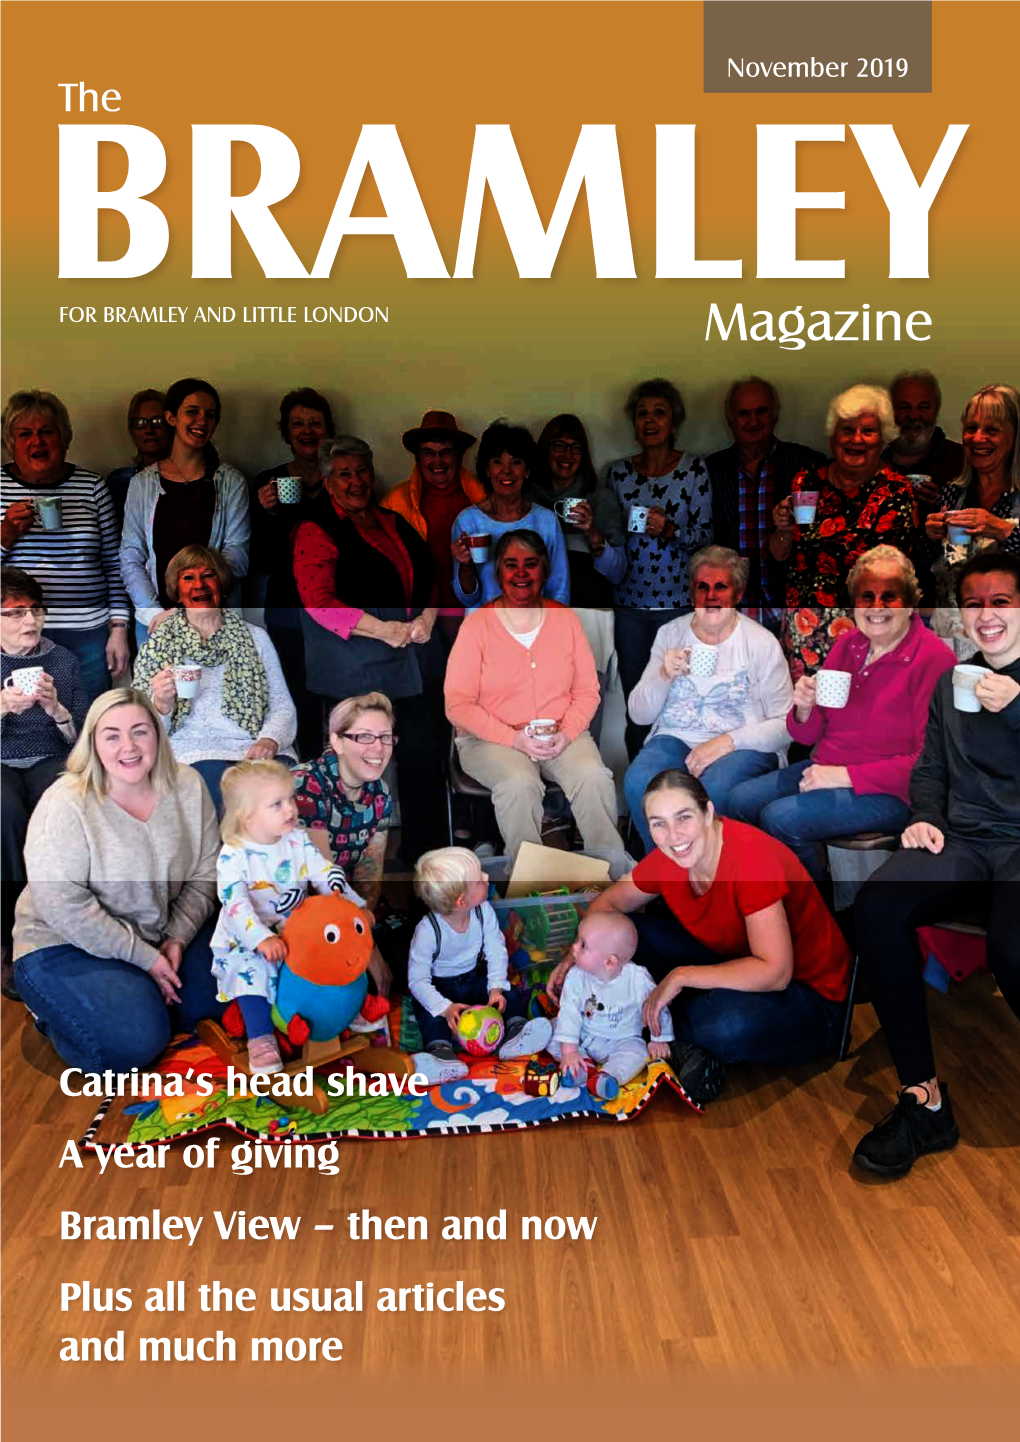 BRAMLEYFOR BRAMLEY and LITTLE LONDON Magazine